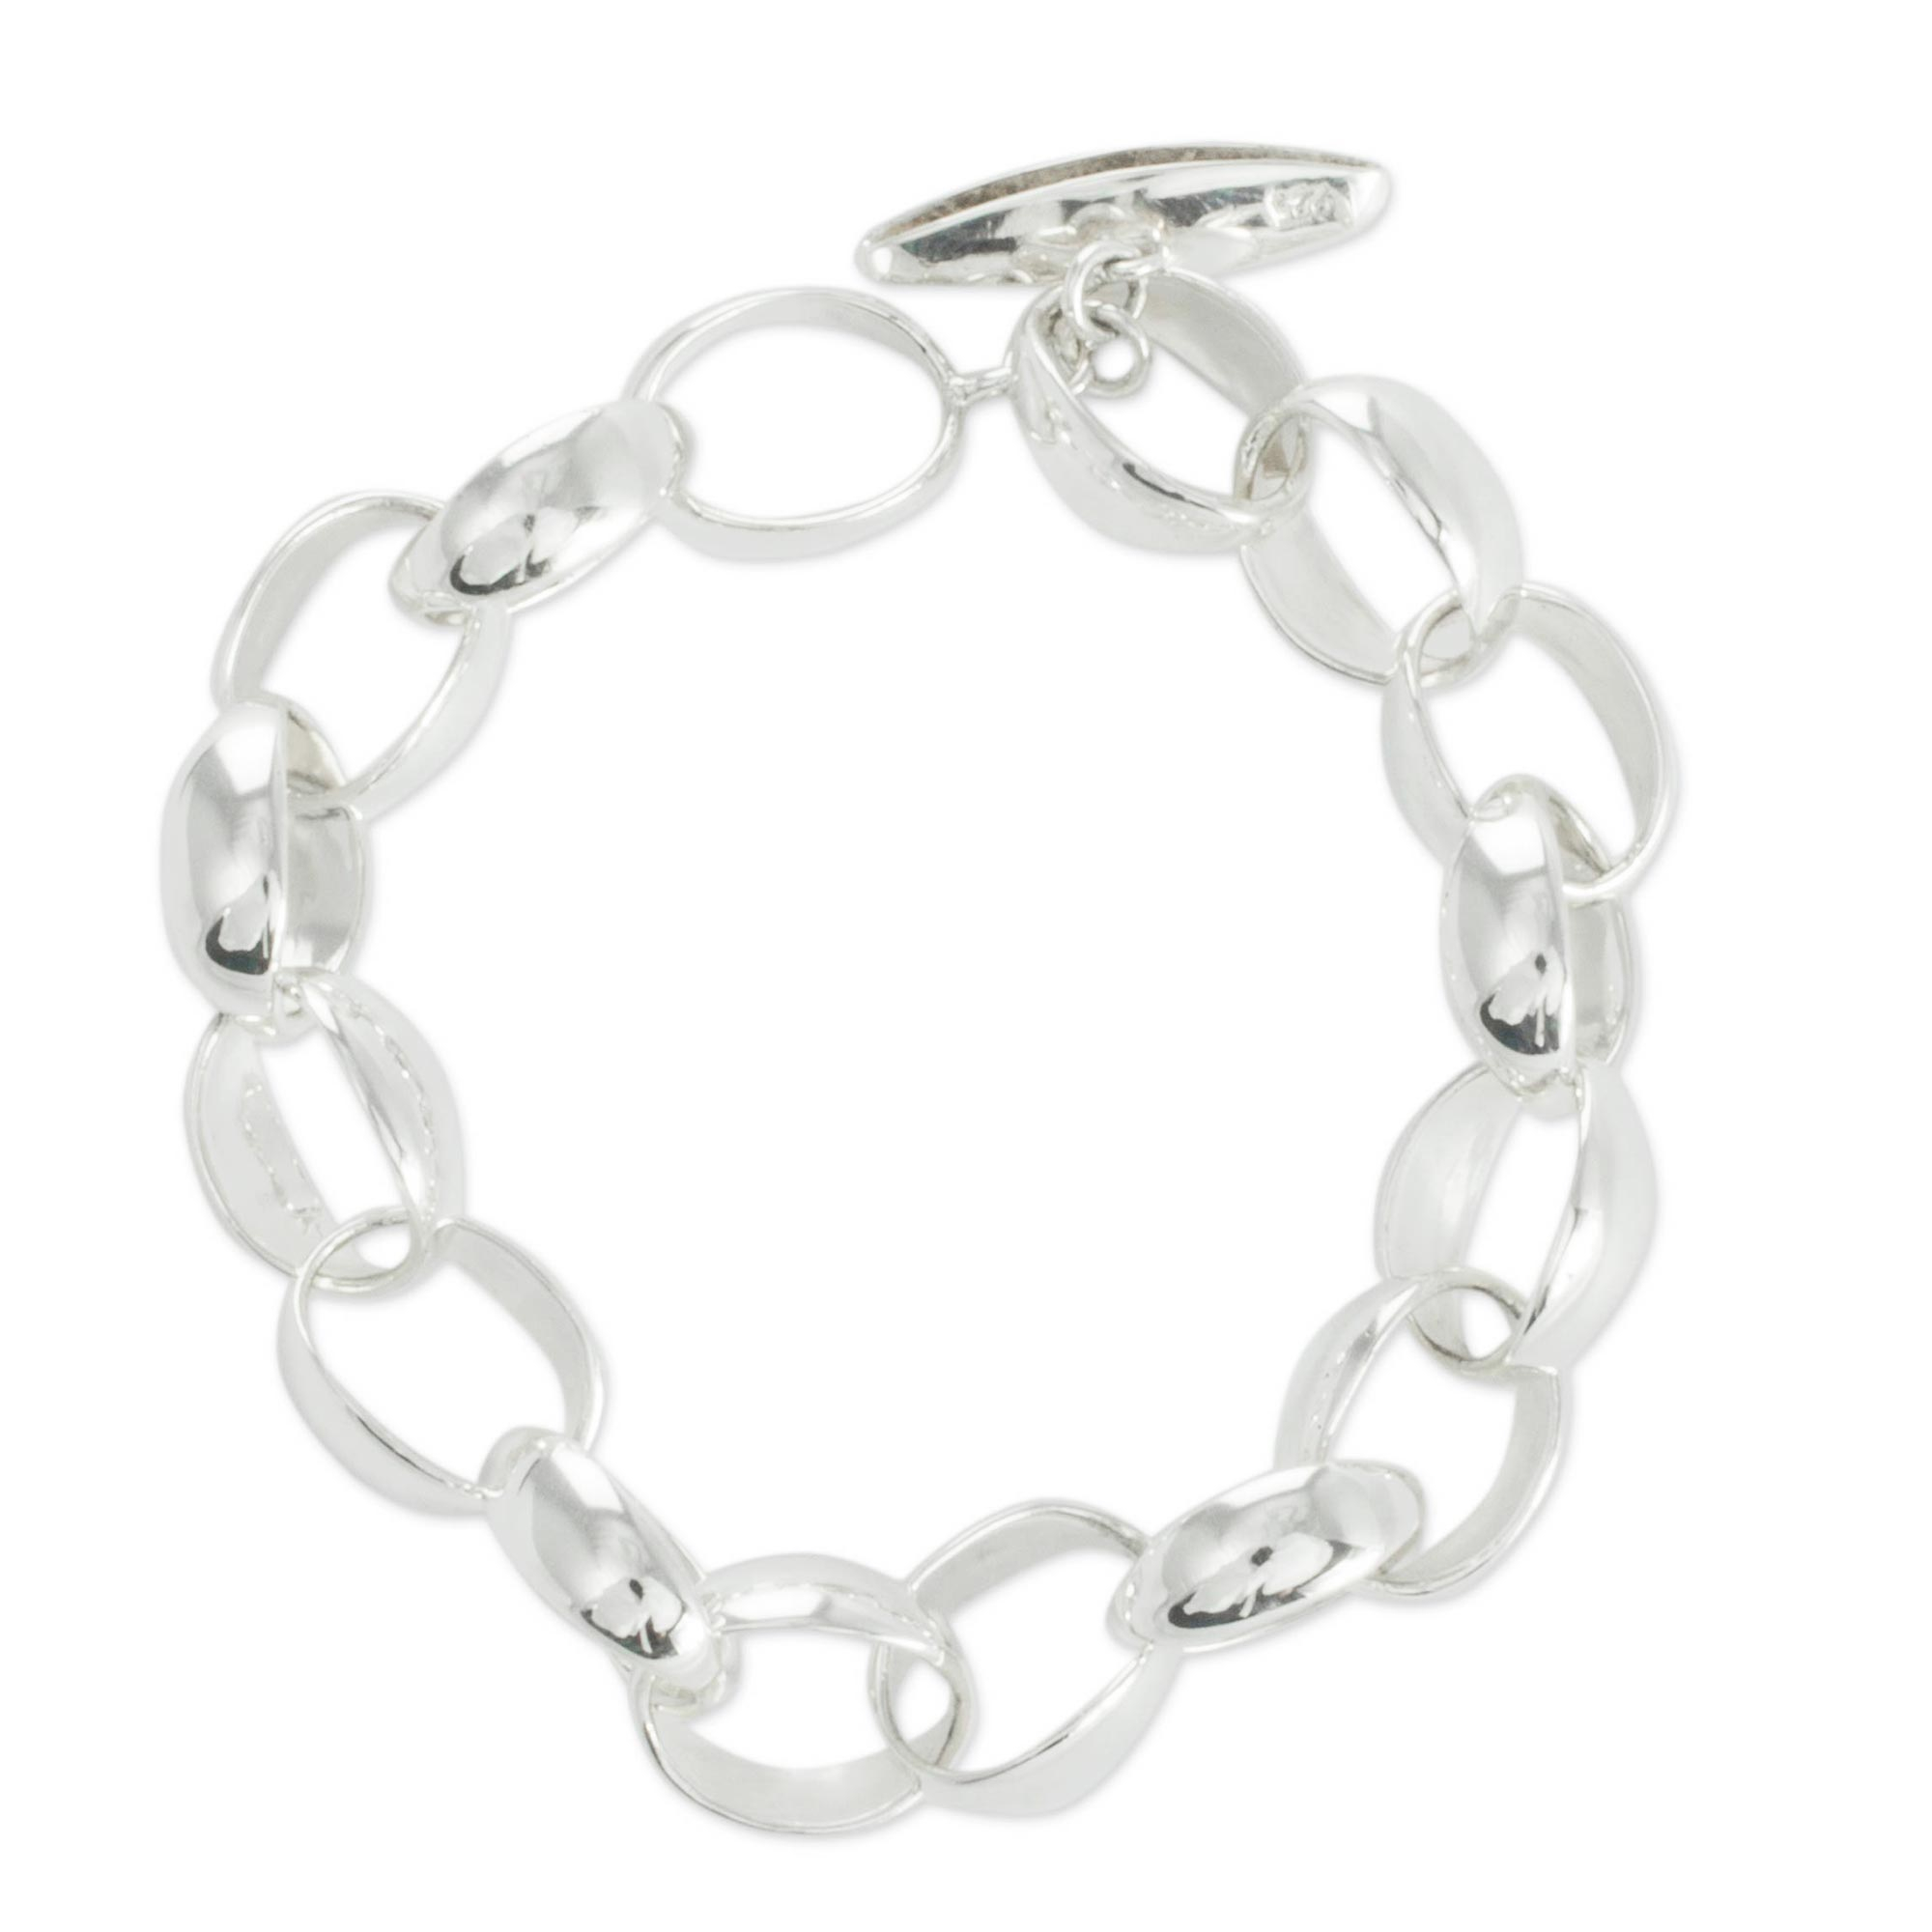 Taxco Silver Jewelry Handcrafted Chain Bracelet - Shine | NOVICA